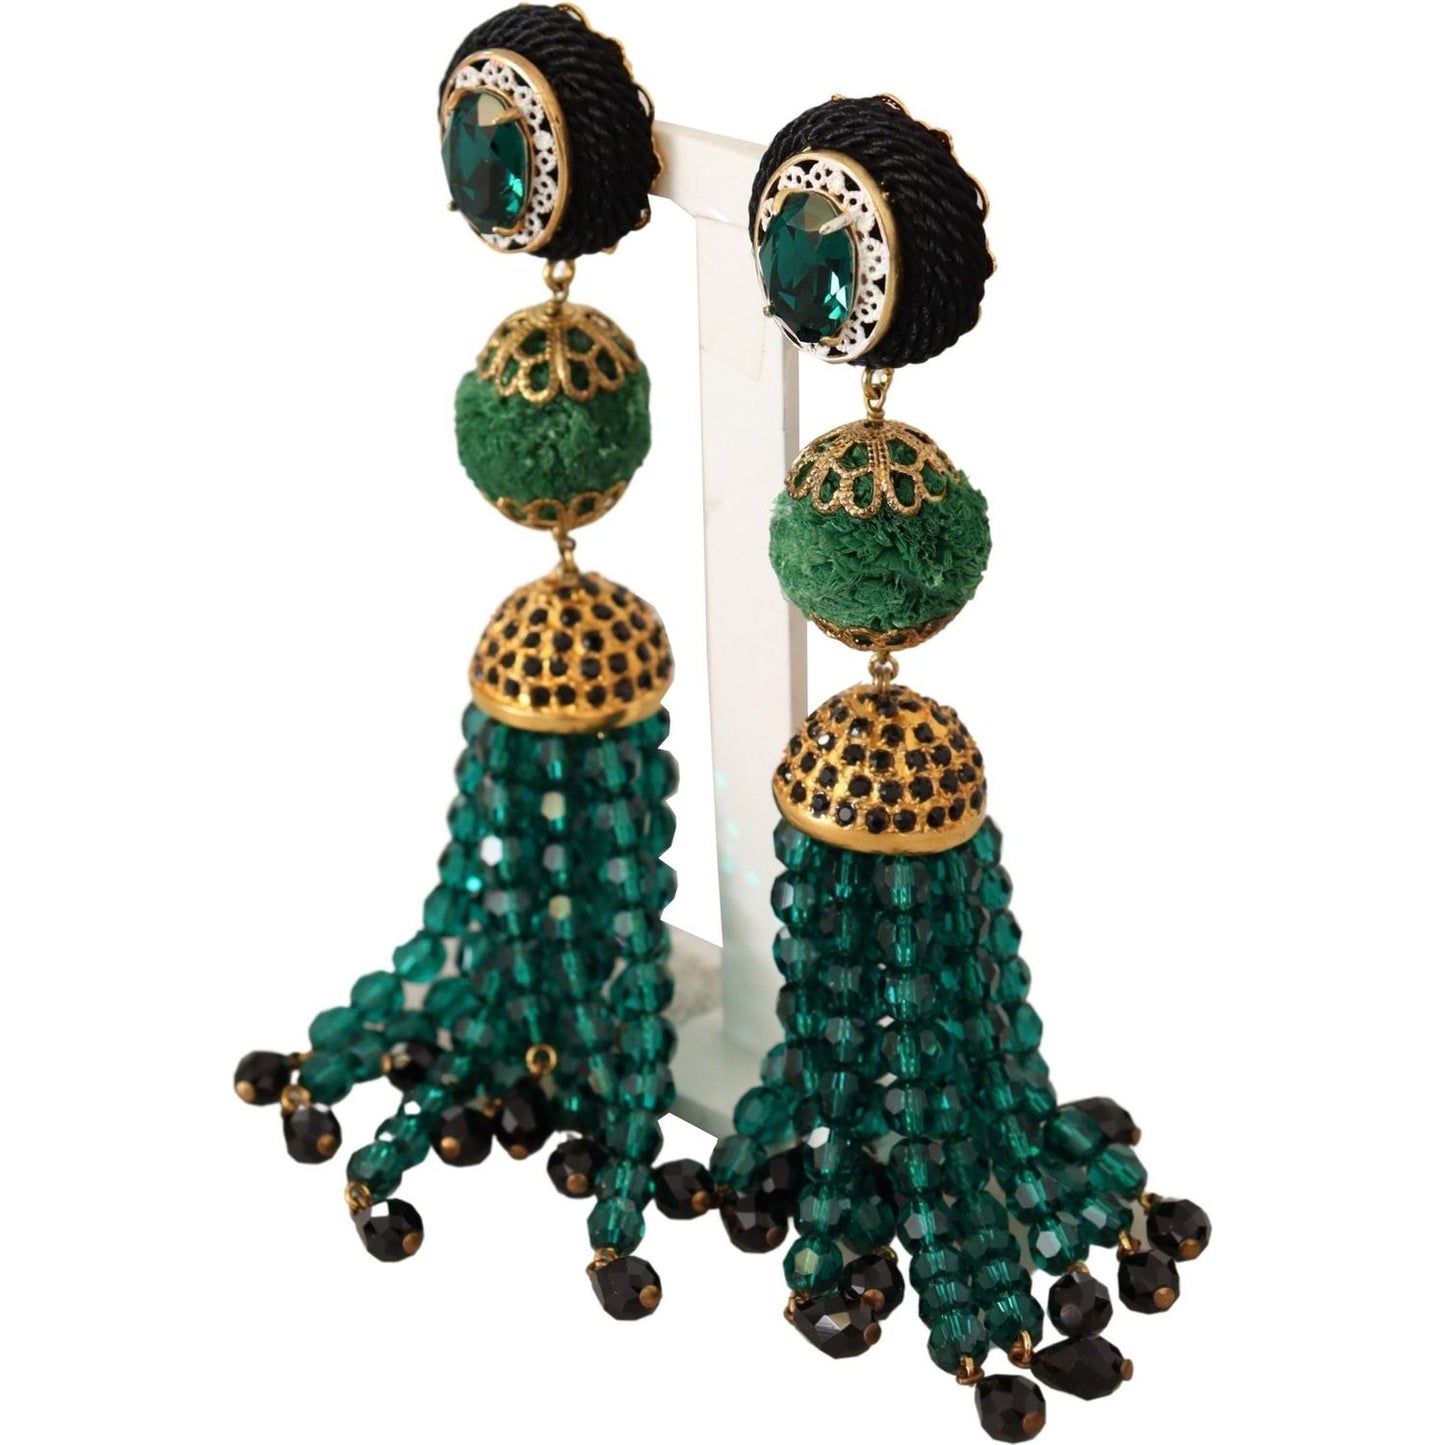 Dolce & Gabbana Elegant Crystal Drop Clip-On Earrings green-crystals-gold-tone-drop-clip-on-dangle-earrings IMG_7621-1-28d7f8f4-9c3.jpg